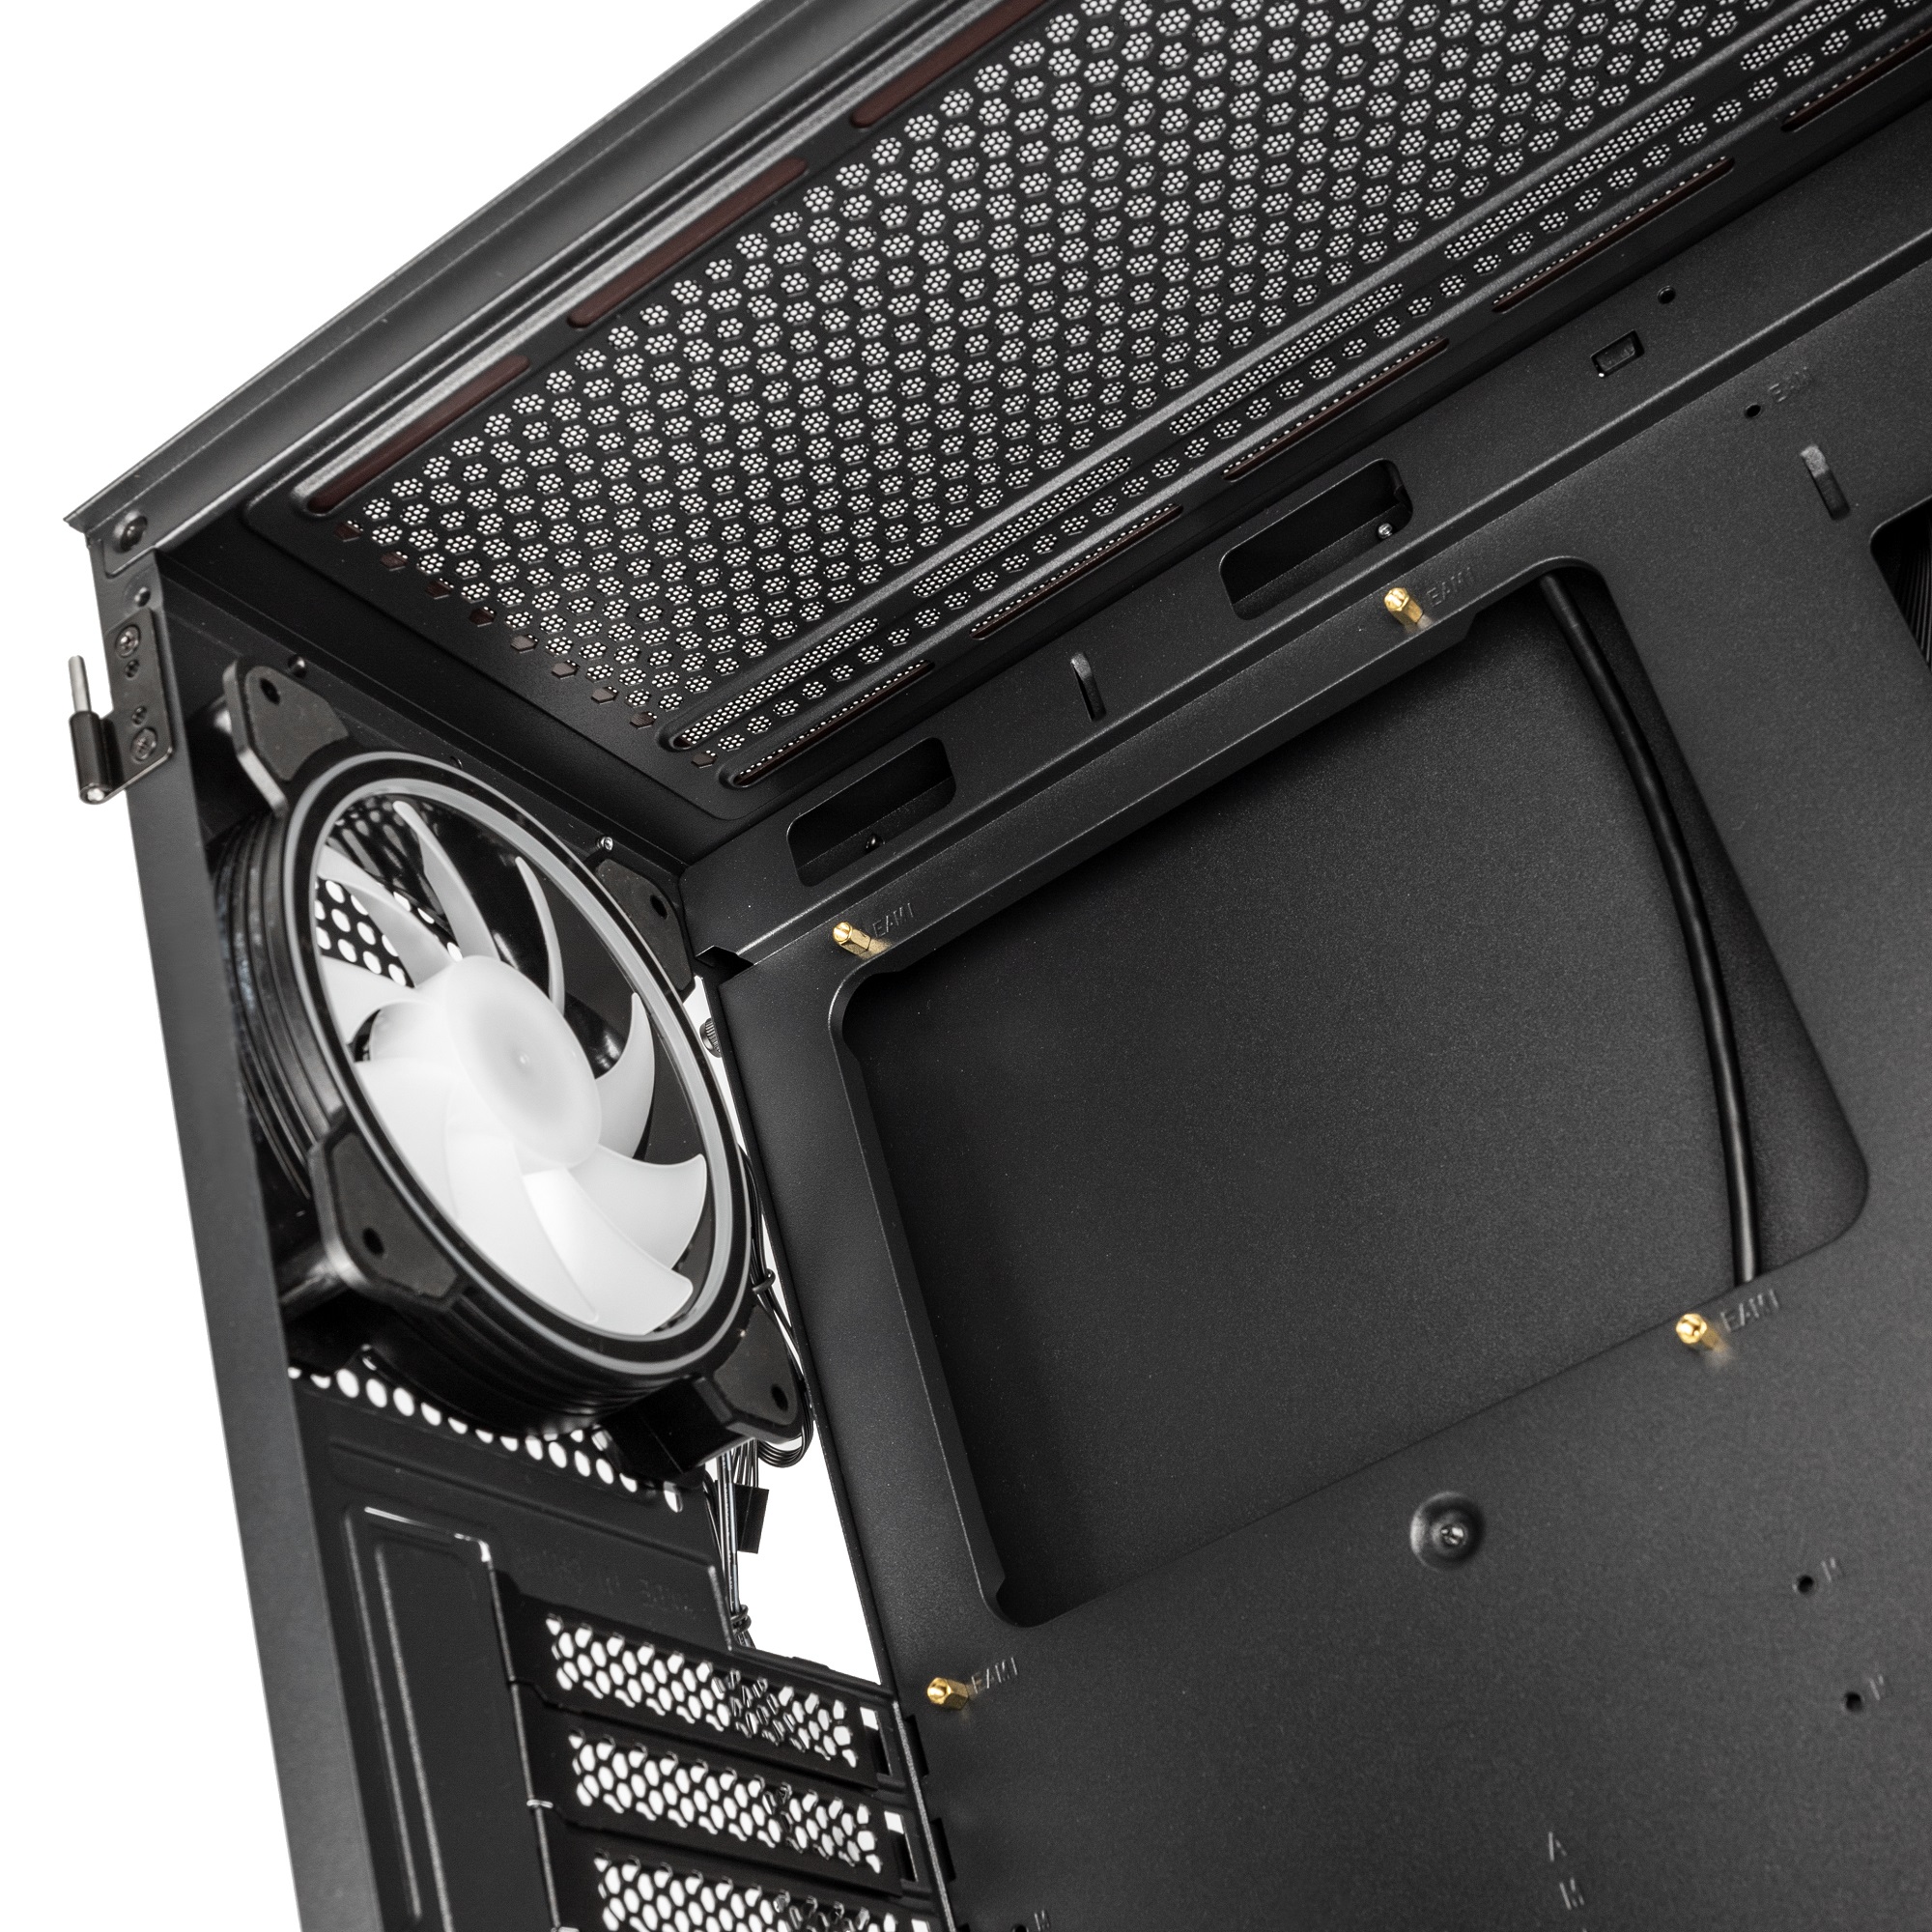 Kolink - Kolink Inspire Series K12 Midi Tower ARGB Gaming Case - Black Window